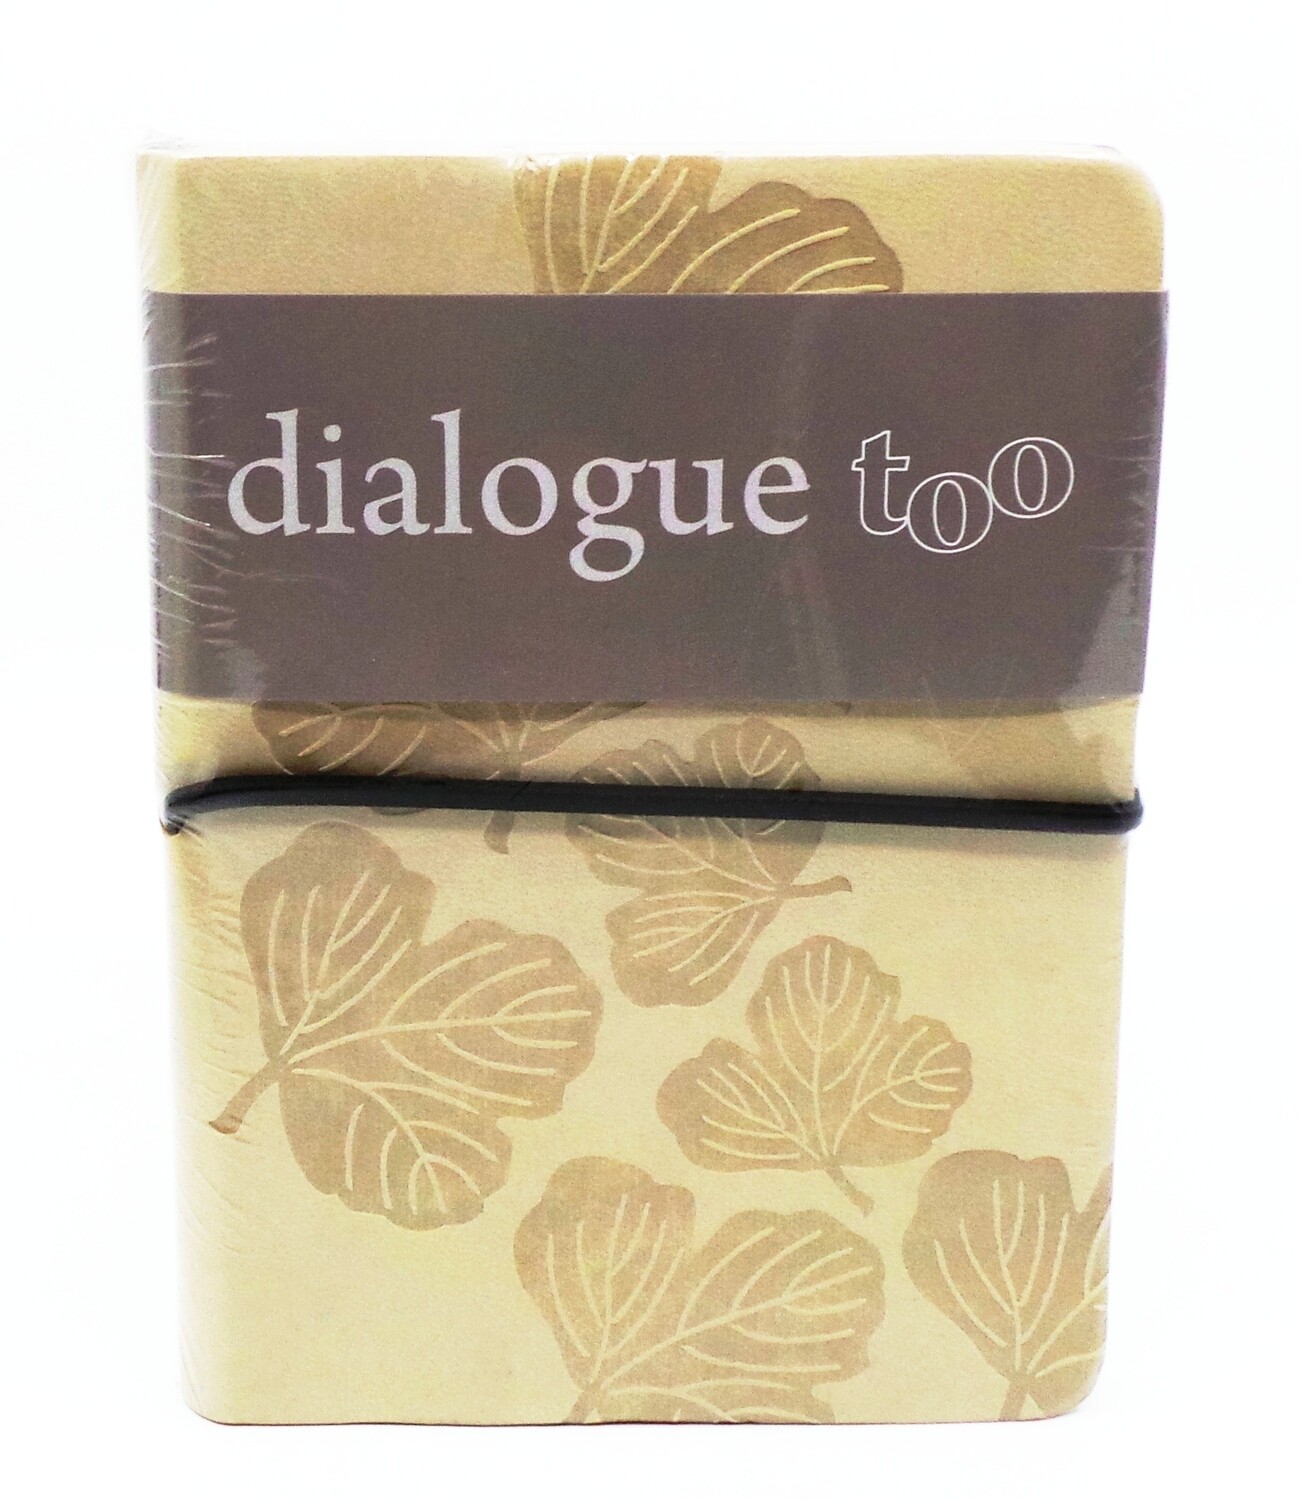 A6 Dialogue too Notebook